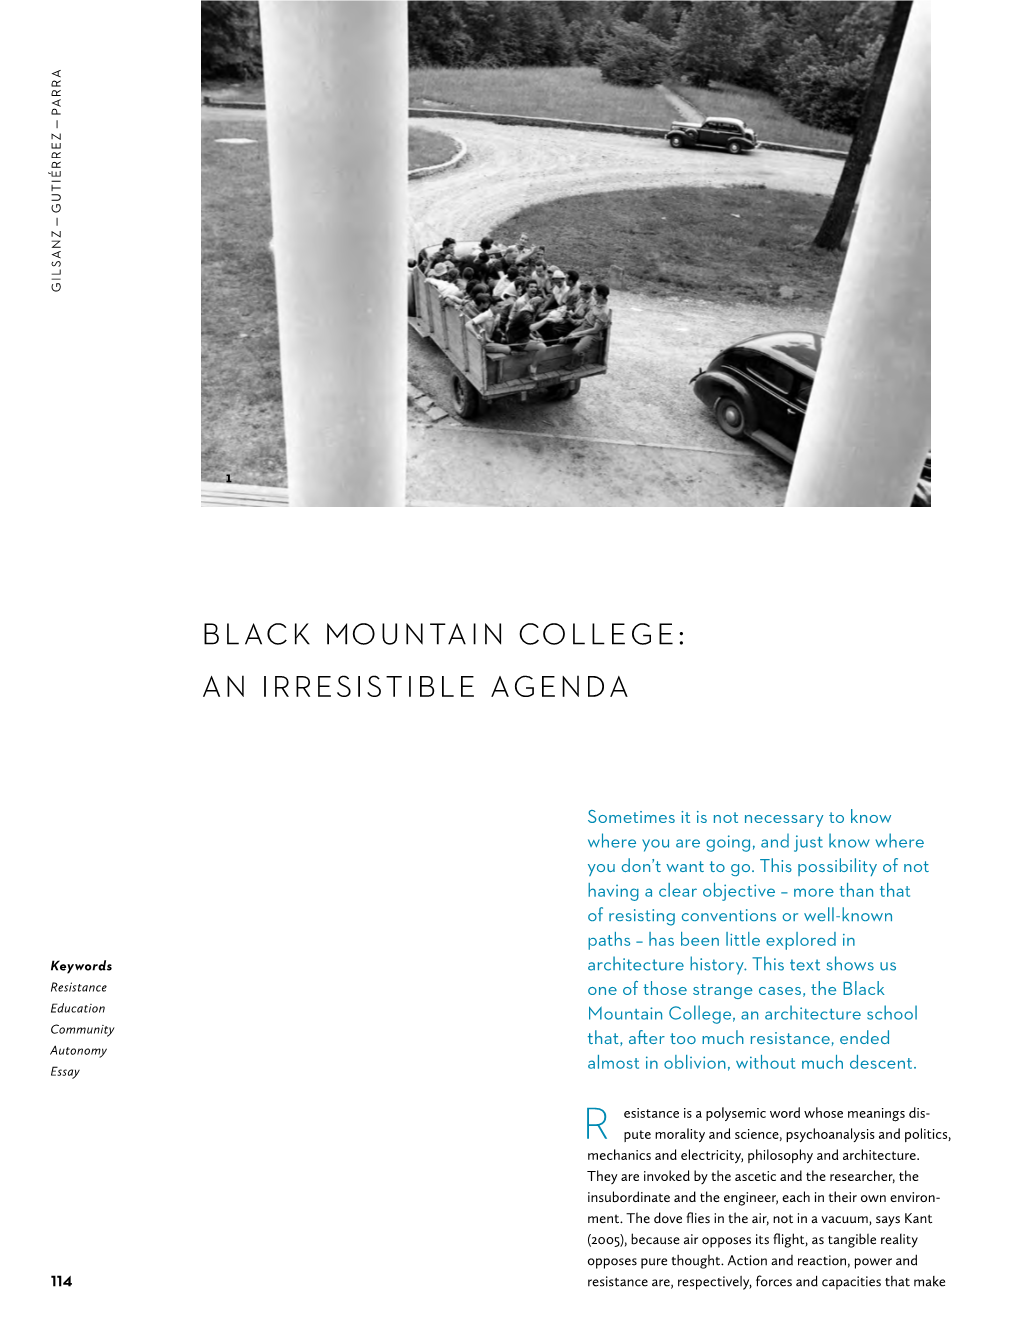 Black Mountain College: an Irresistible Agenda